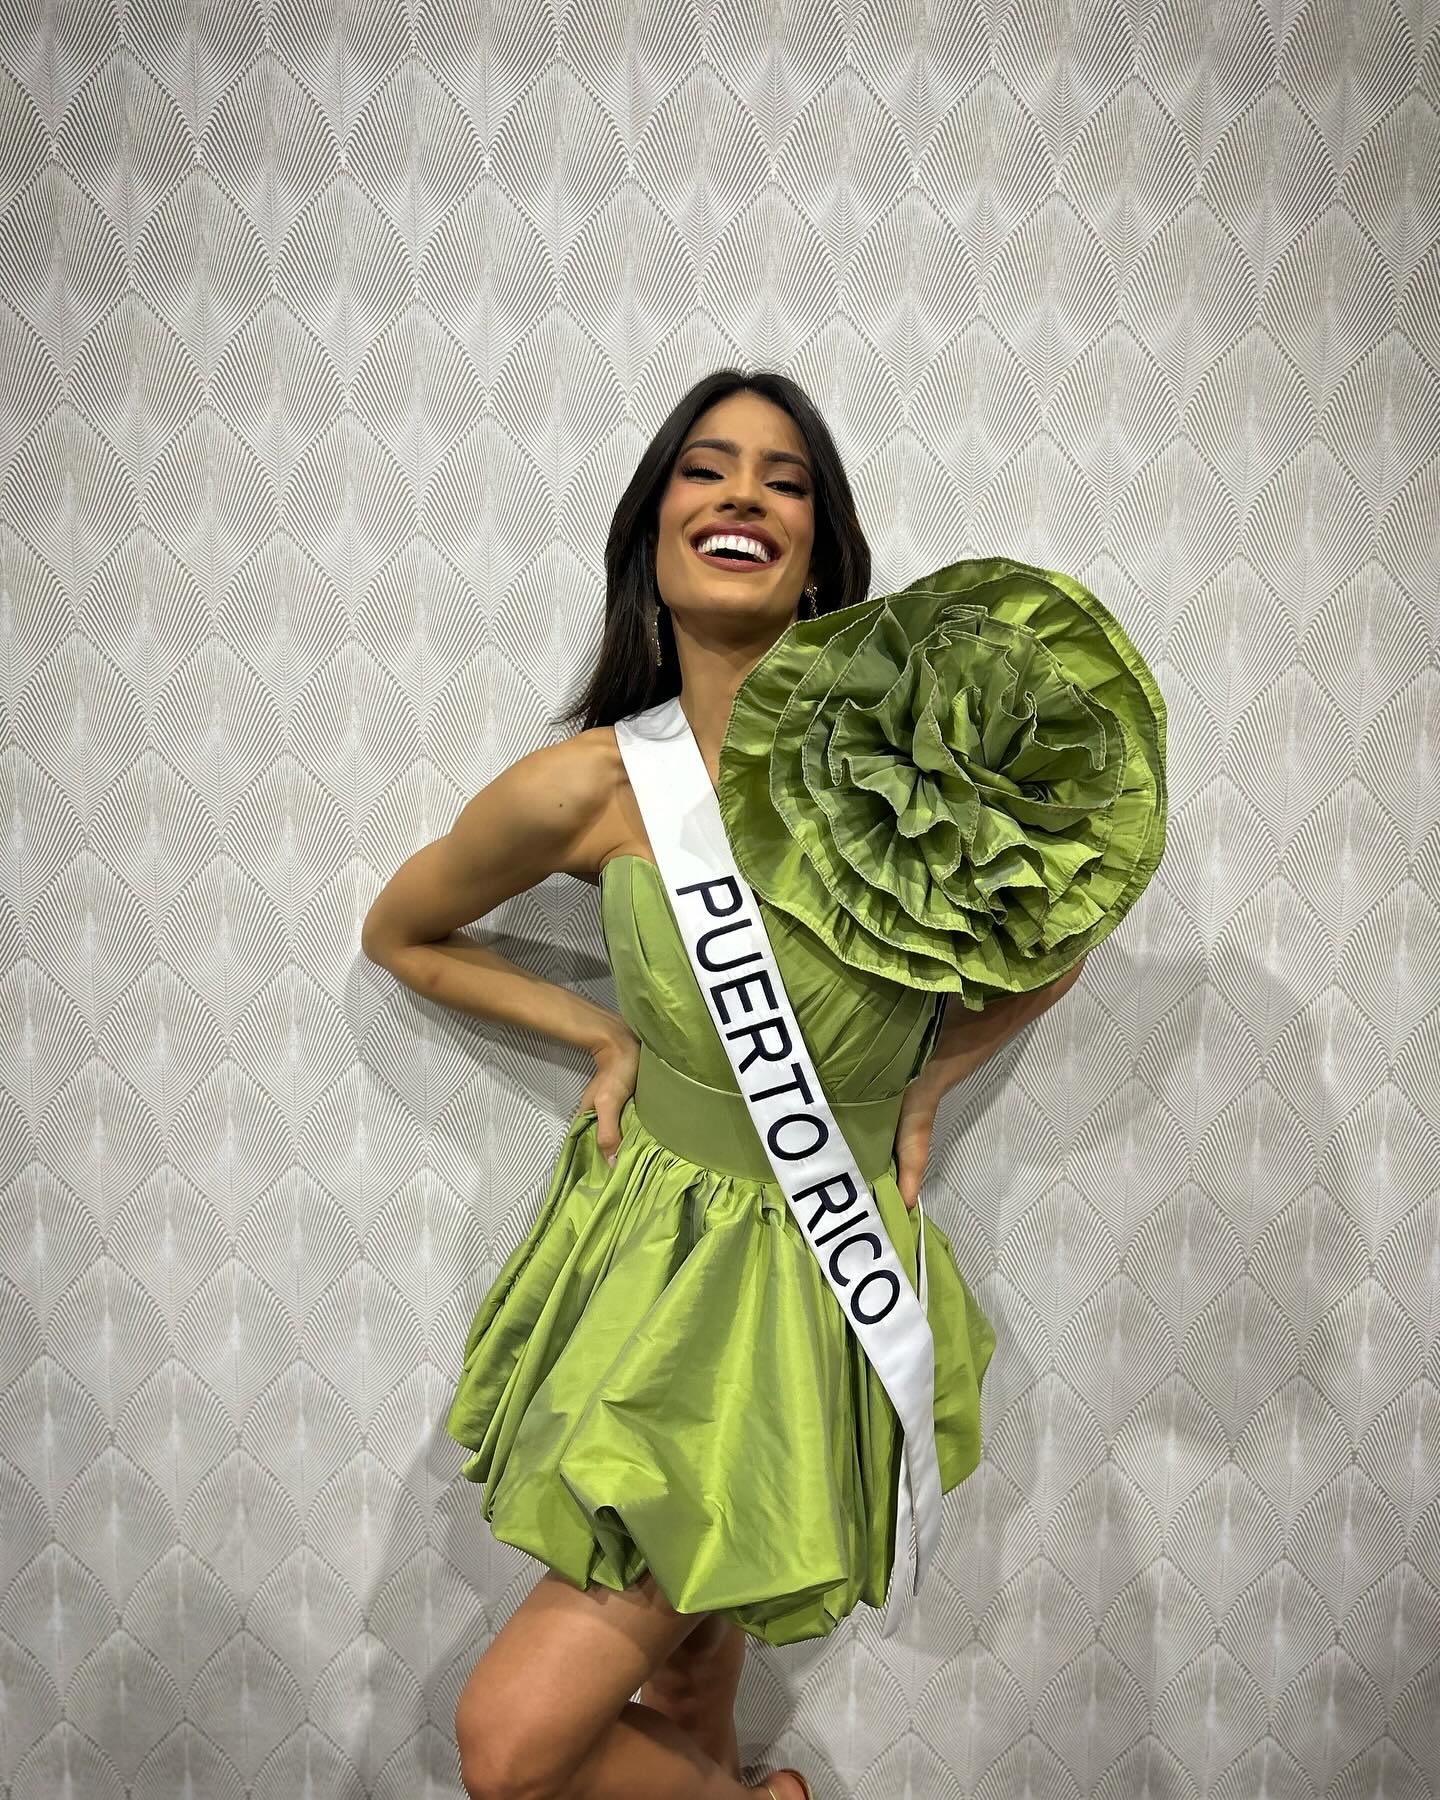 karla guilfu, top 5 de miss universe 2023/1st runner-up de miss supranational 2021. - Página 23 43185511